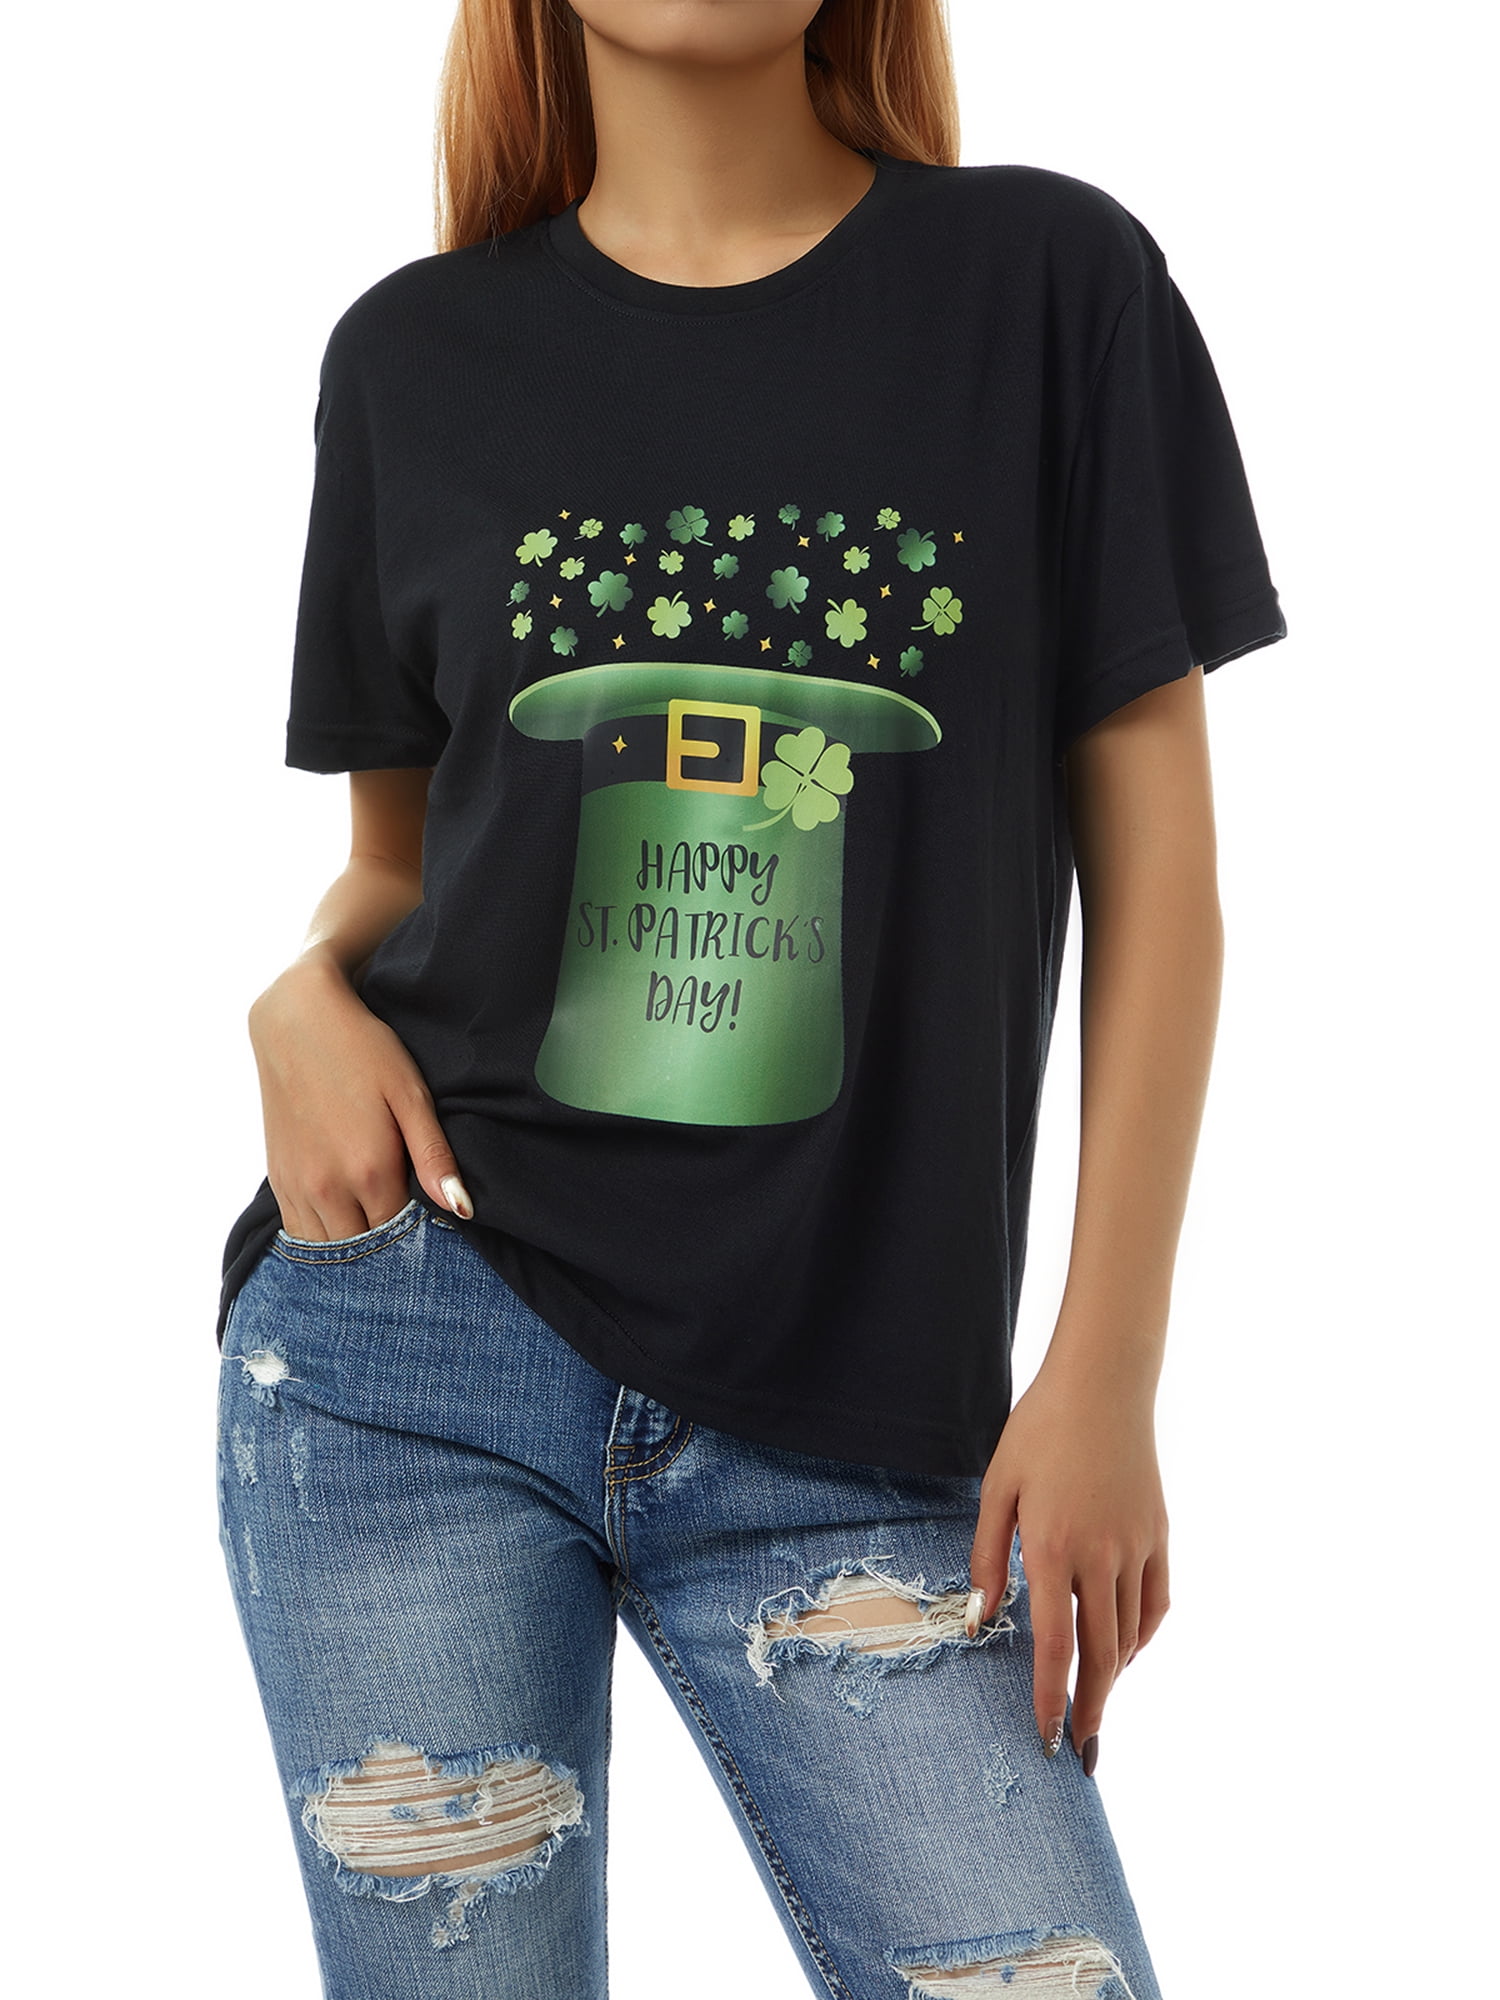 Uplord Mens Four-Leaf Clover Digital Dark Print Round Neck Casual Fashion Print T-Shirt Short Sleeve 